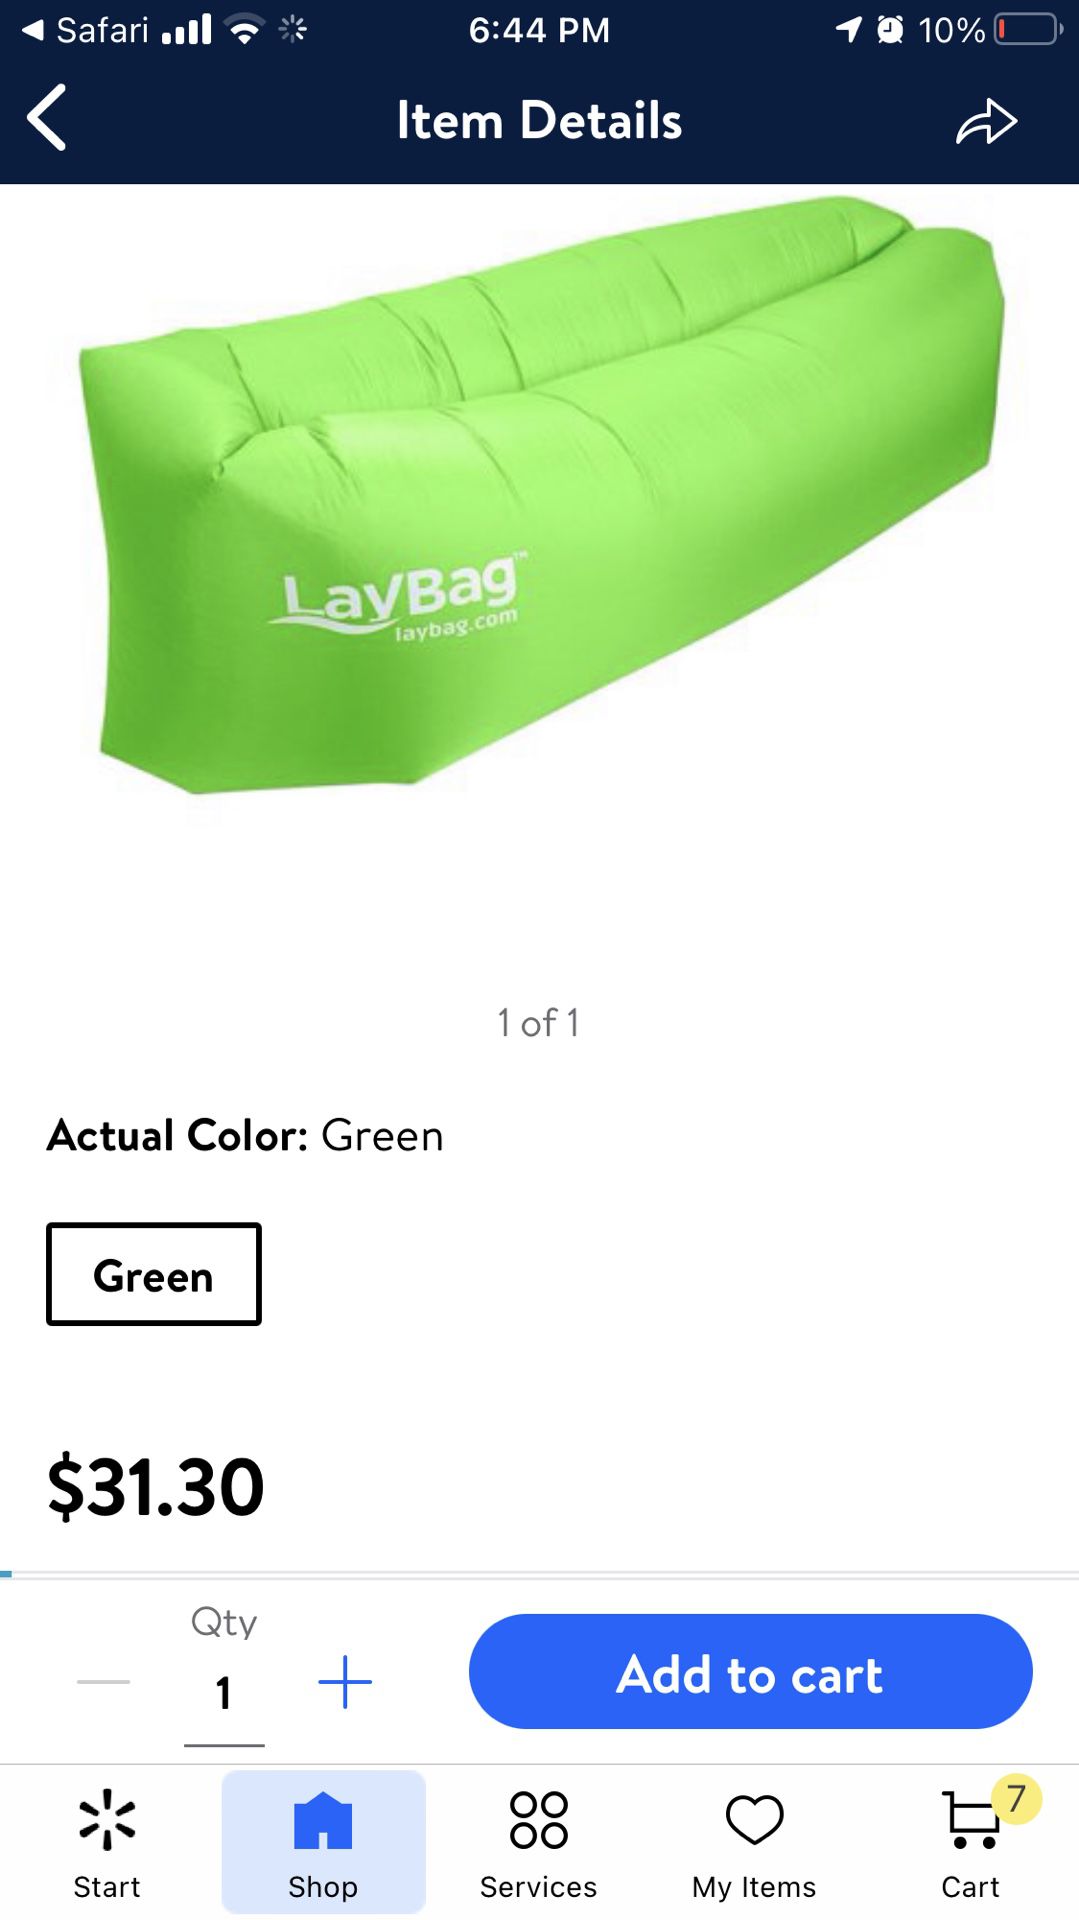 Lay Bag